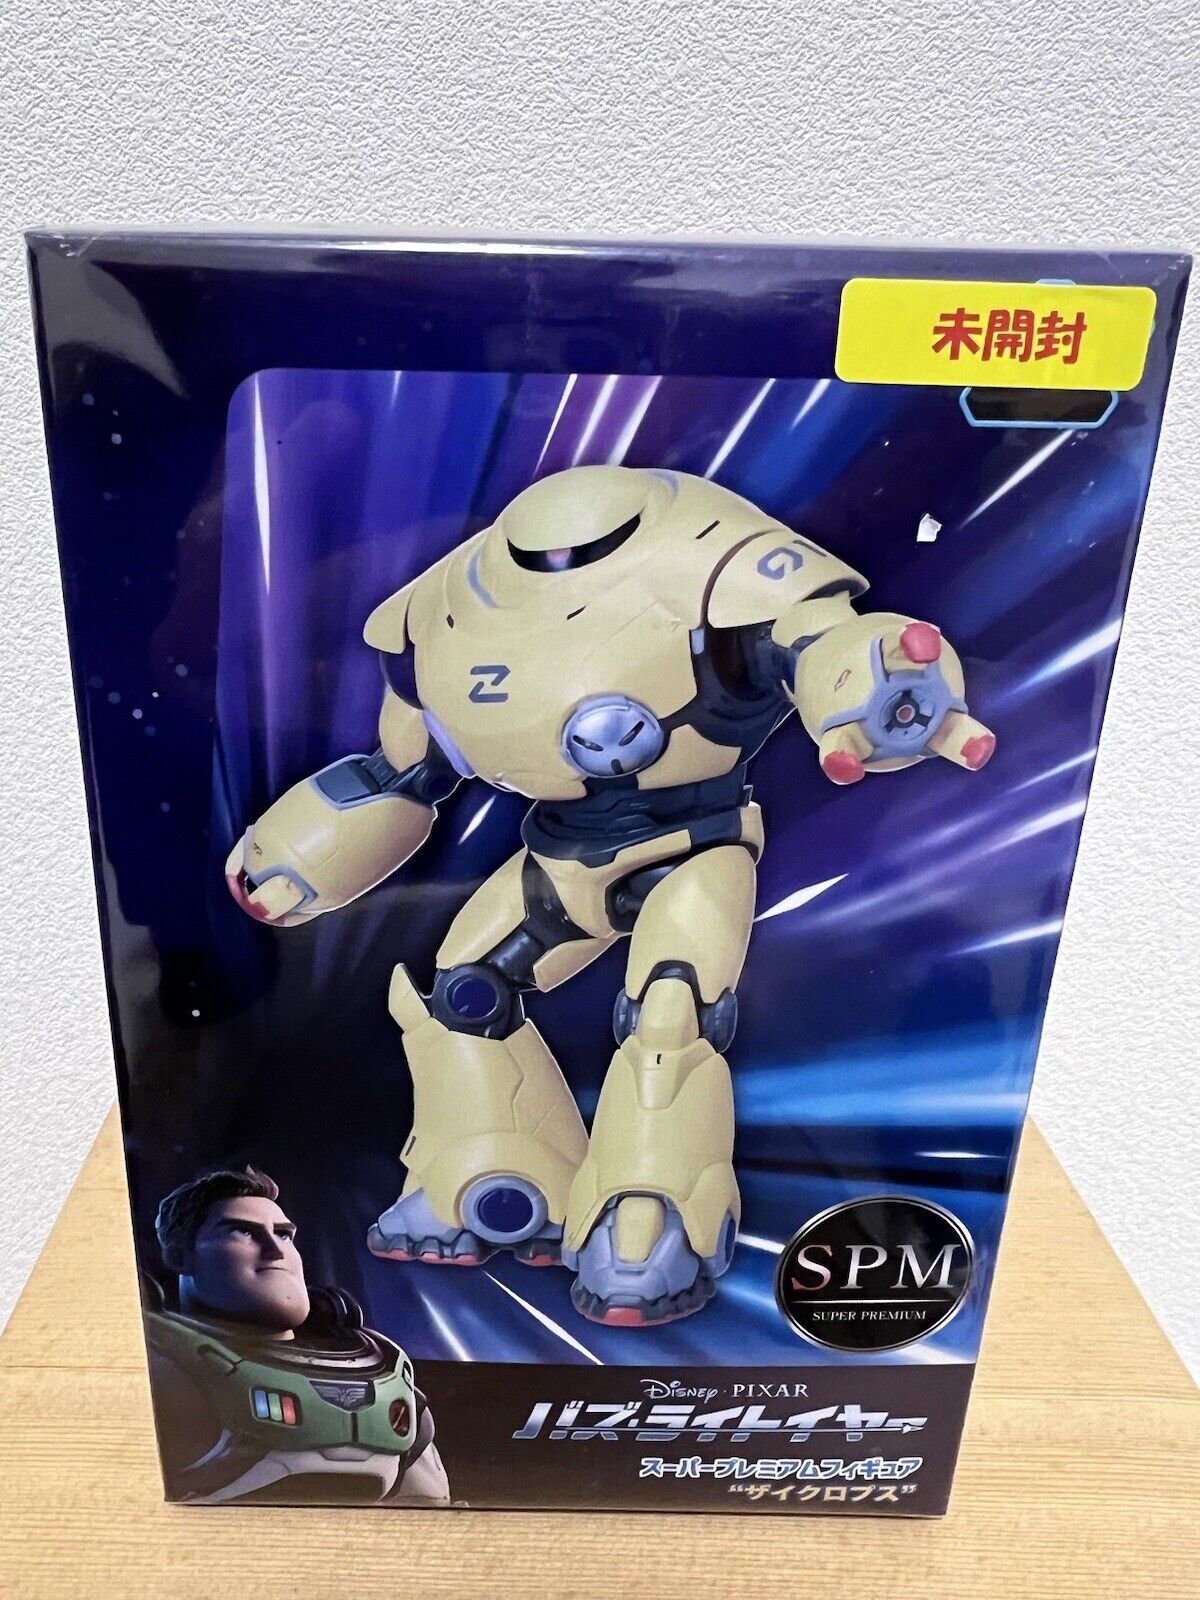 SEGA Super premium figure buzz lightyear zyclops Disney Pixar new sealed japan